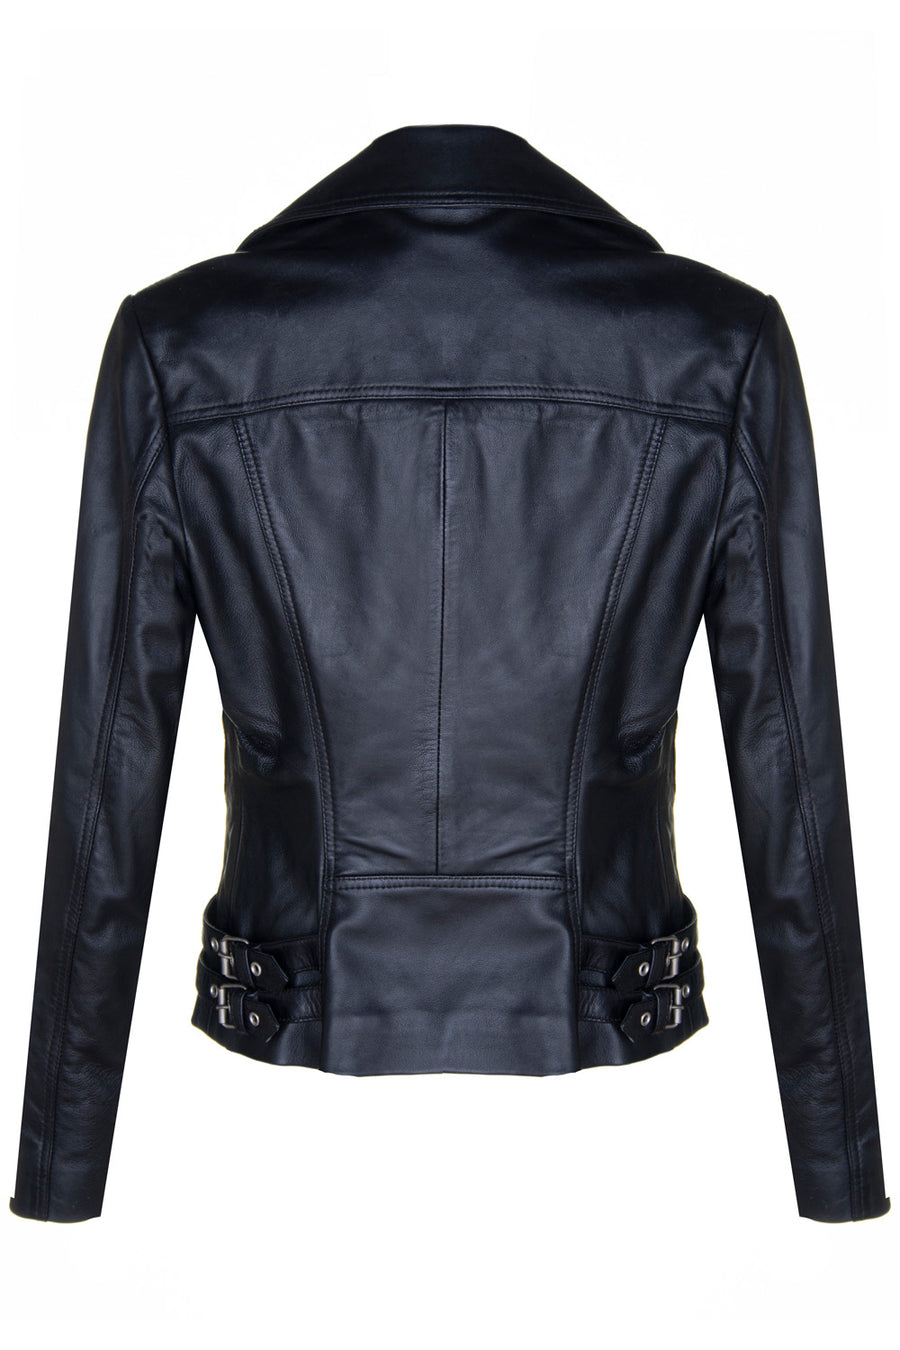 Ladies 2588 Black or Tan Fashion Biker Jacket with Unique Pockets in Soft Lambskin